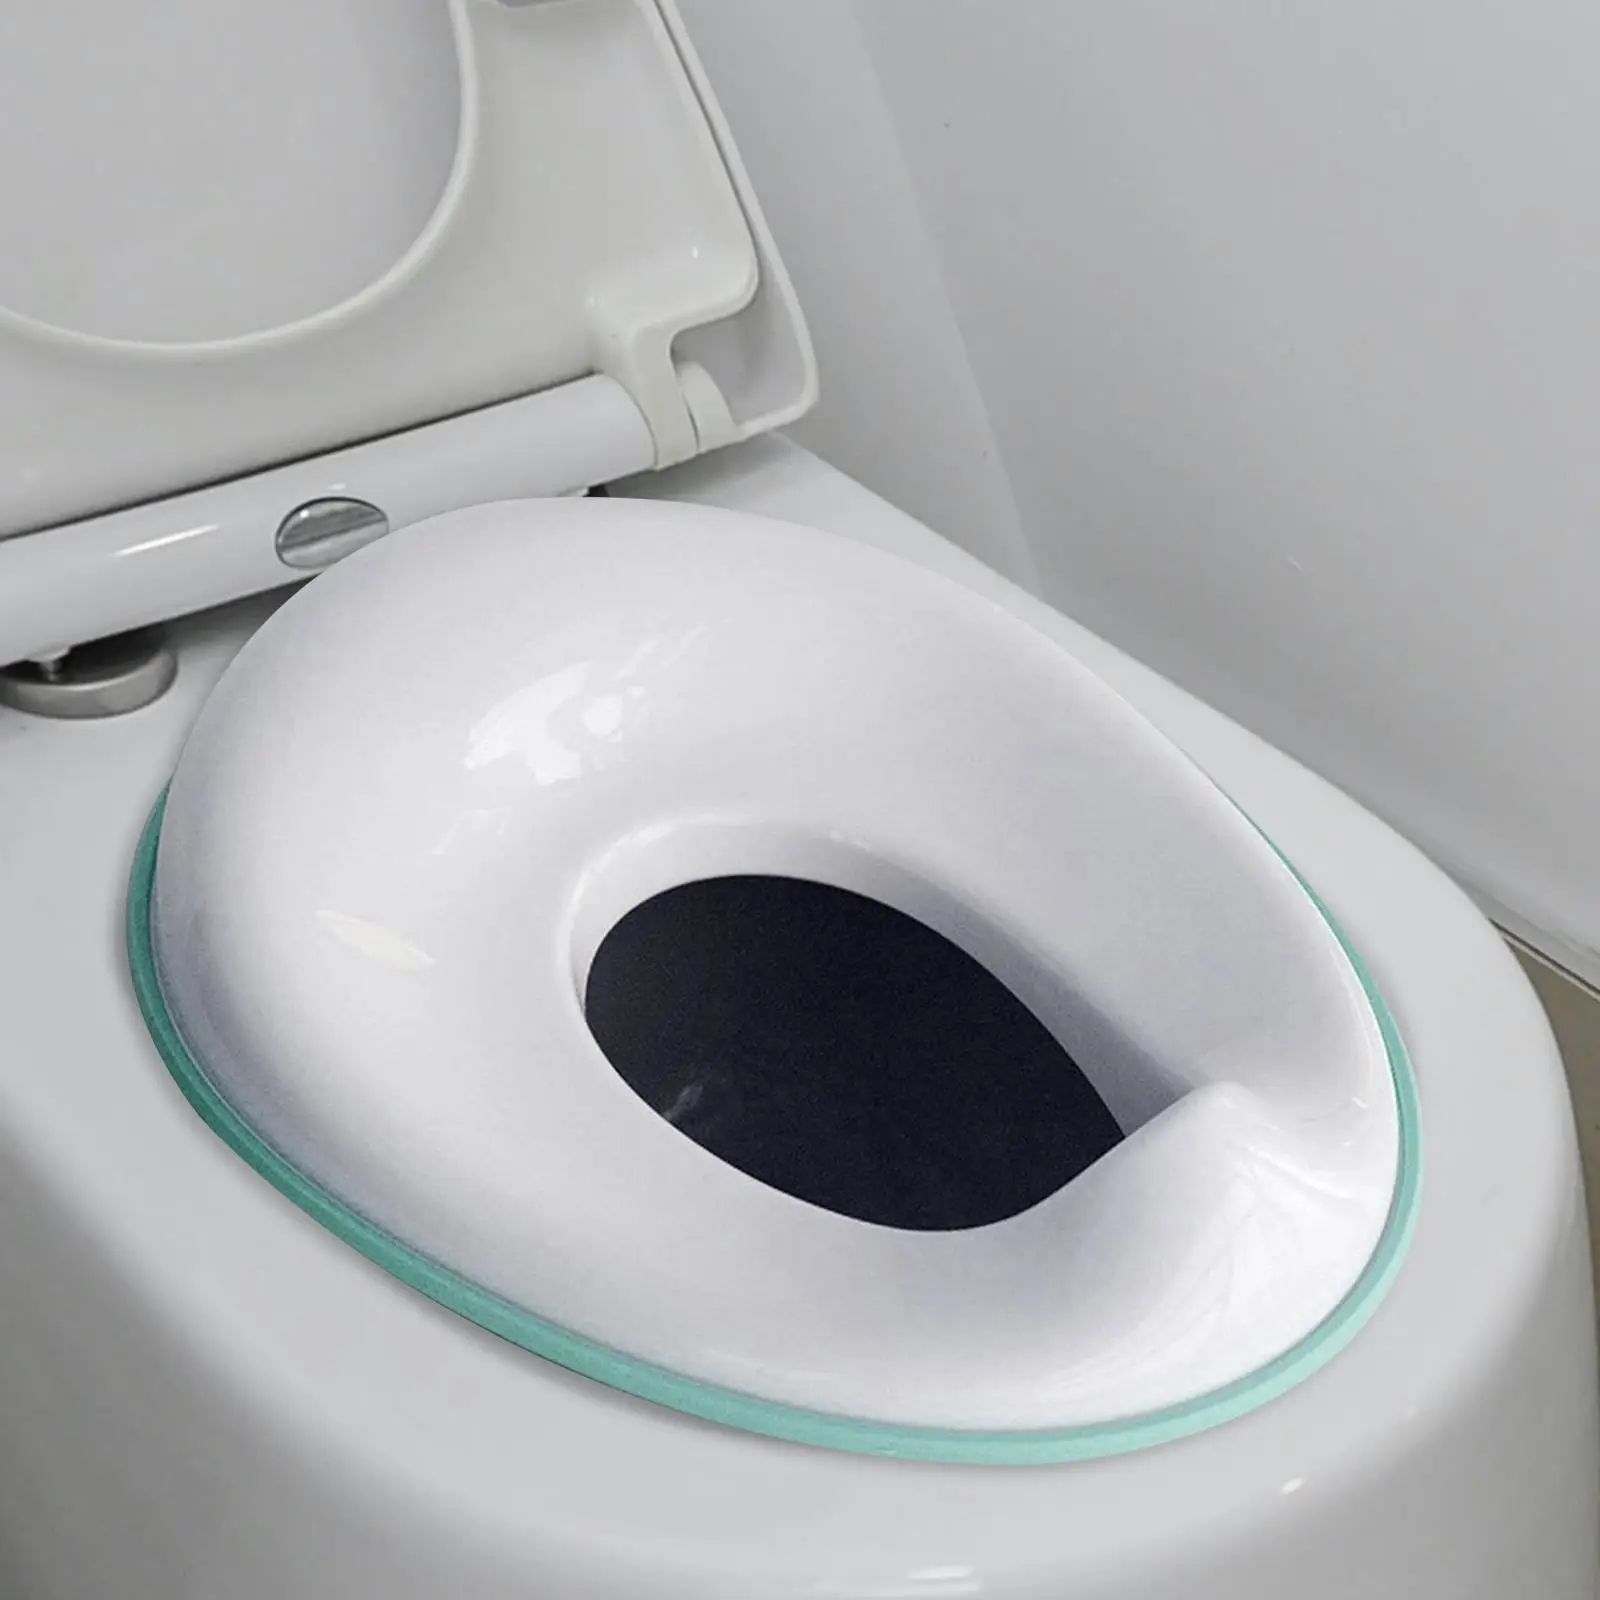 Toddler Toilet Training Seat Potty splash Fits Round & Oval Toilets Space Saving Potty Seat Ring Toilet Trainer